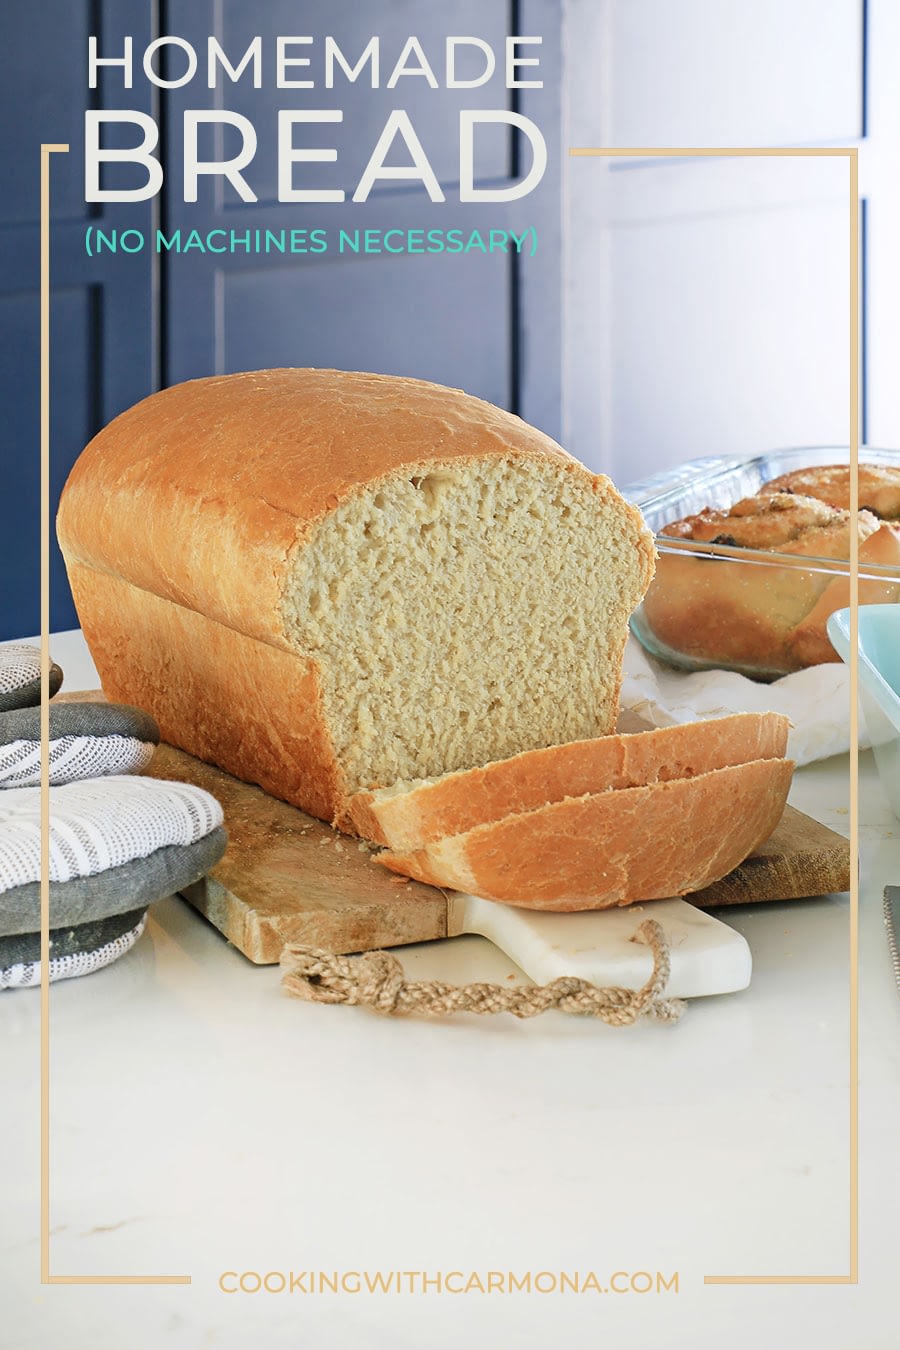 Homemade bread (no machines necessary)